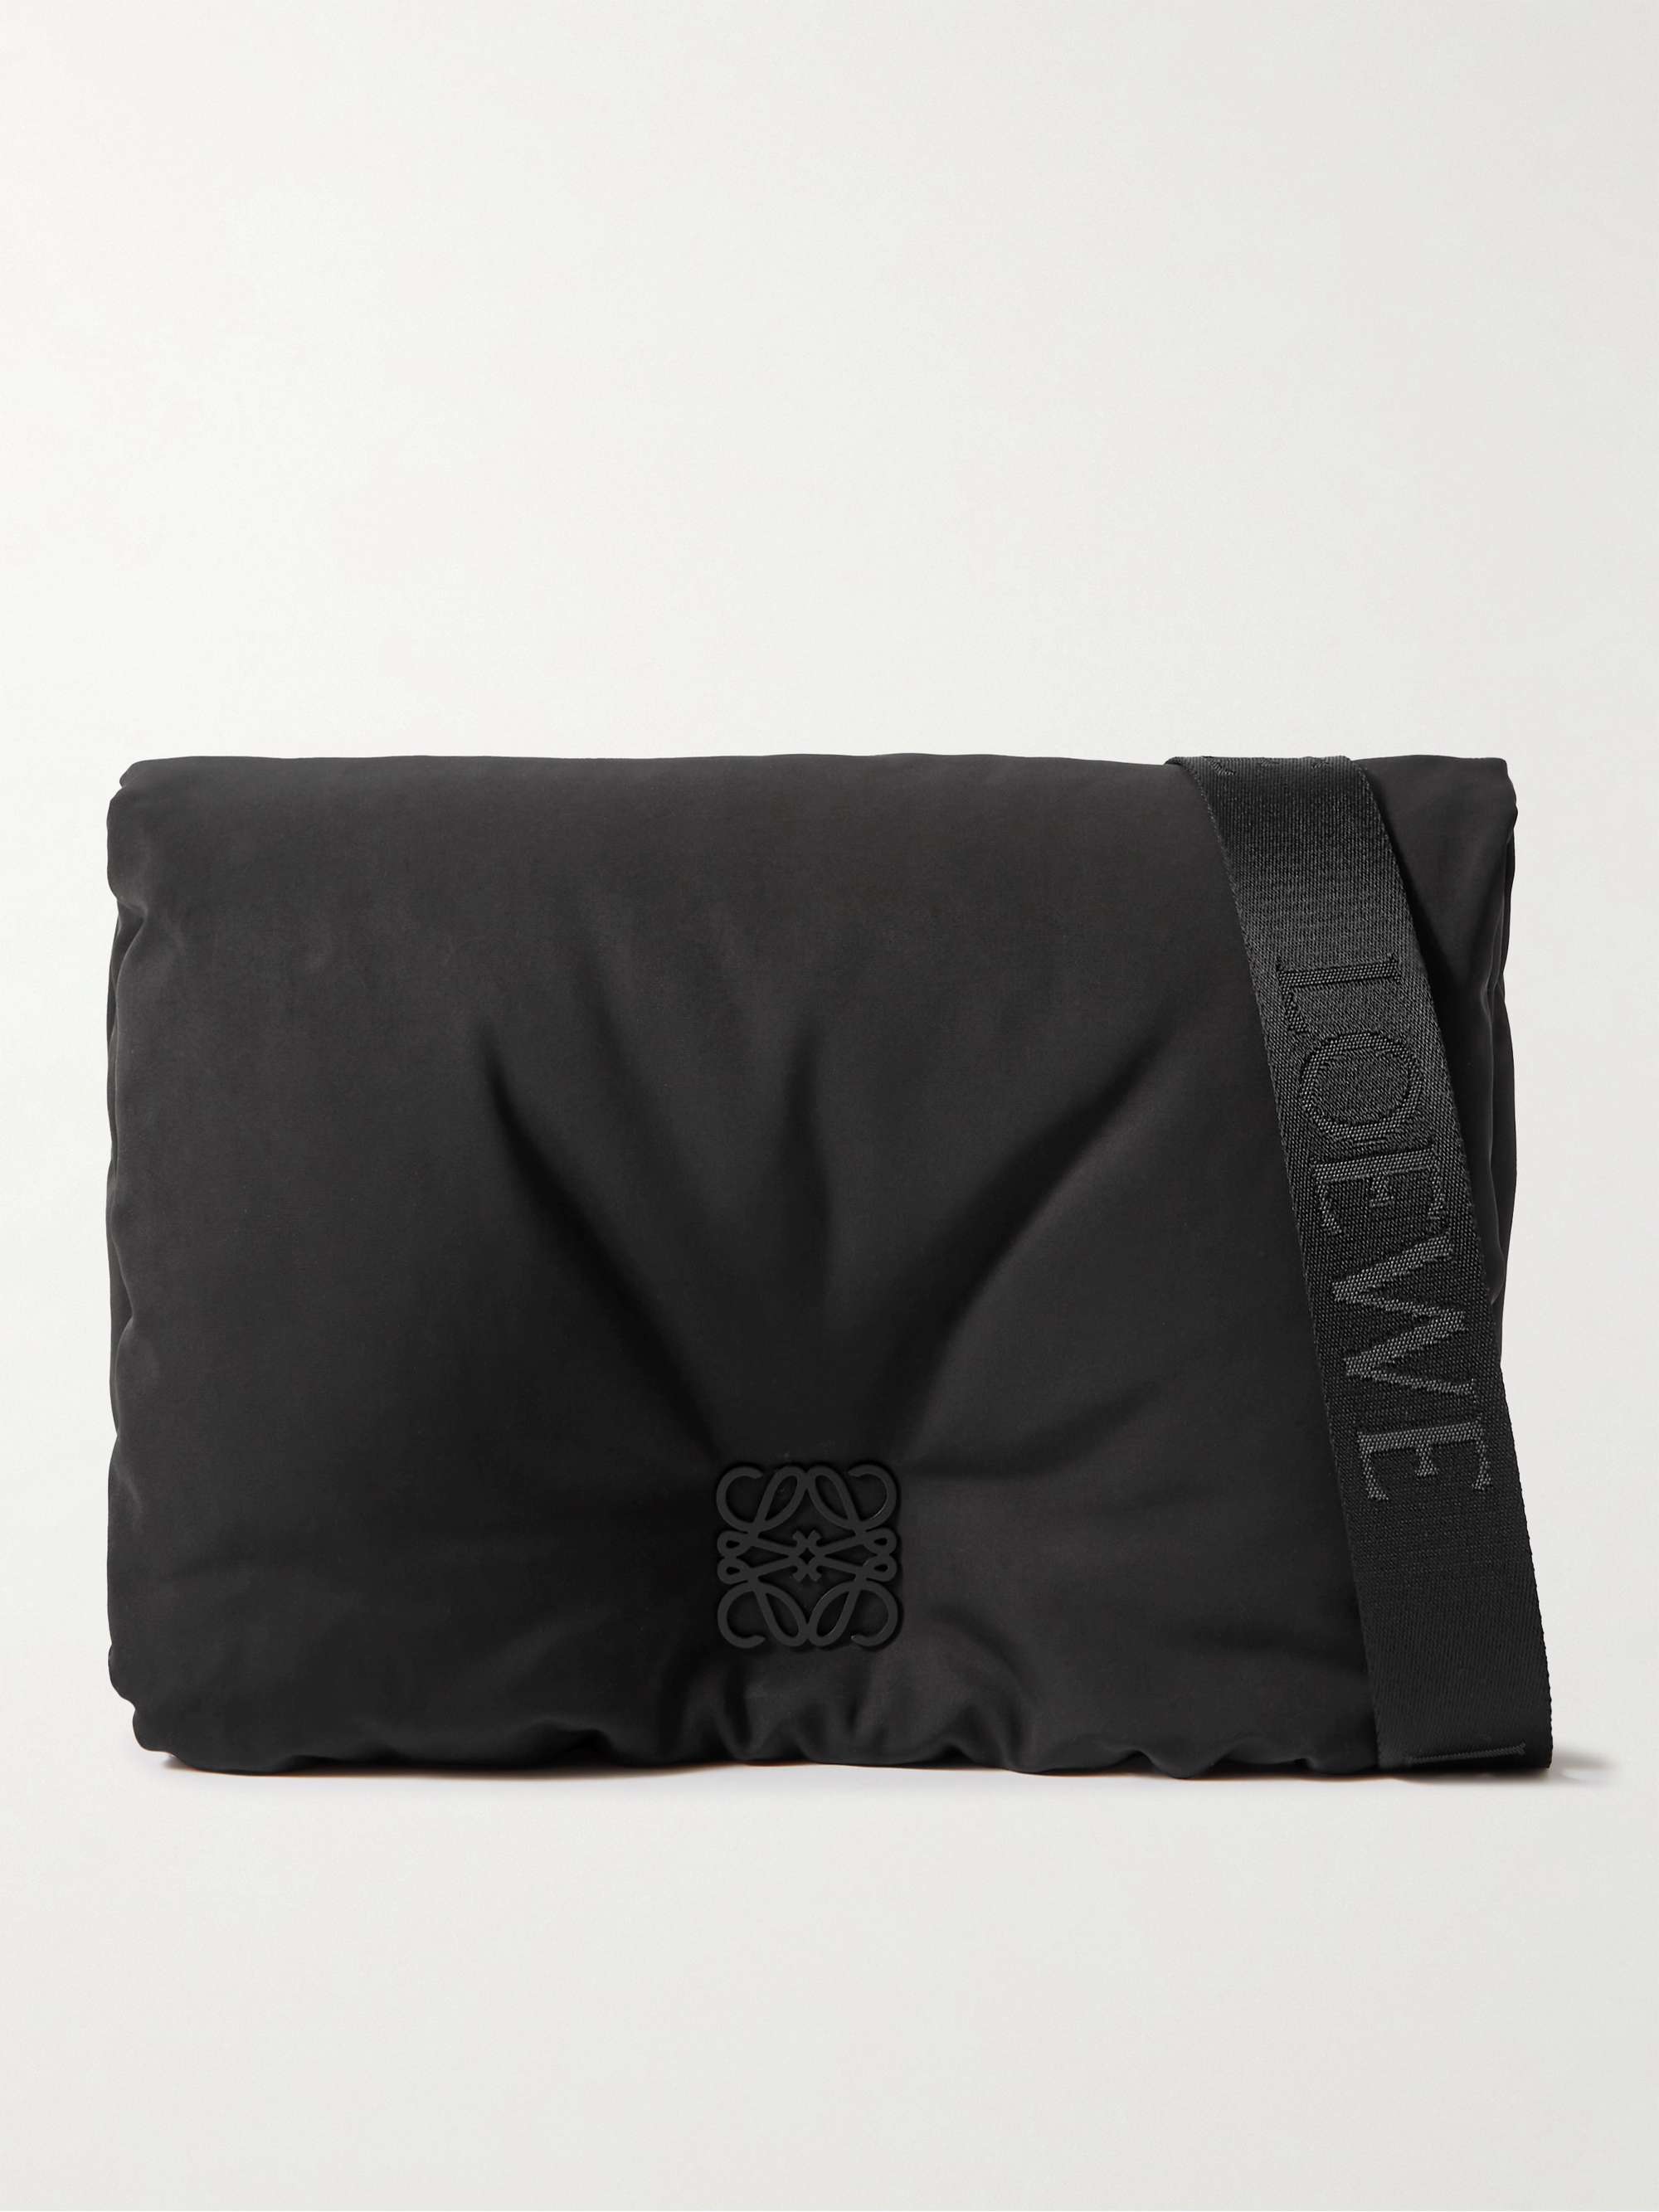 Goya Puffer Anagram Medium Messenger Bag in Black - Loewe